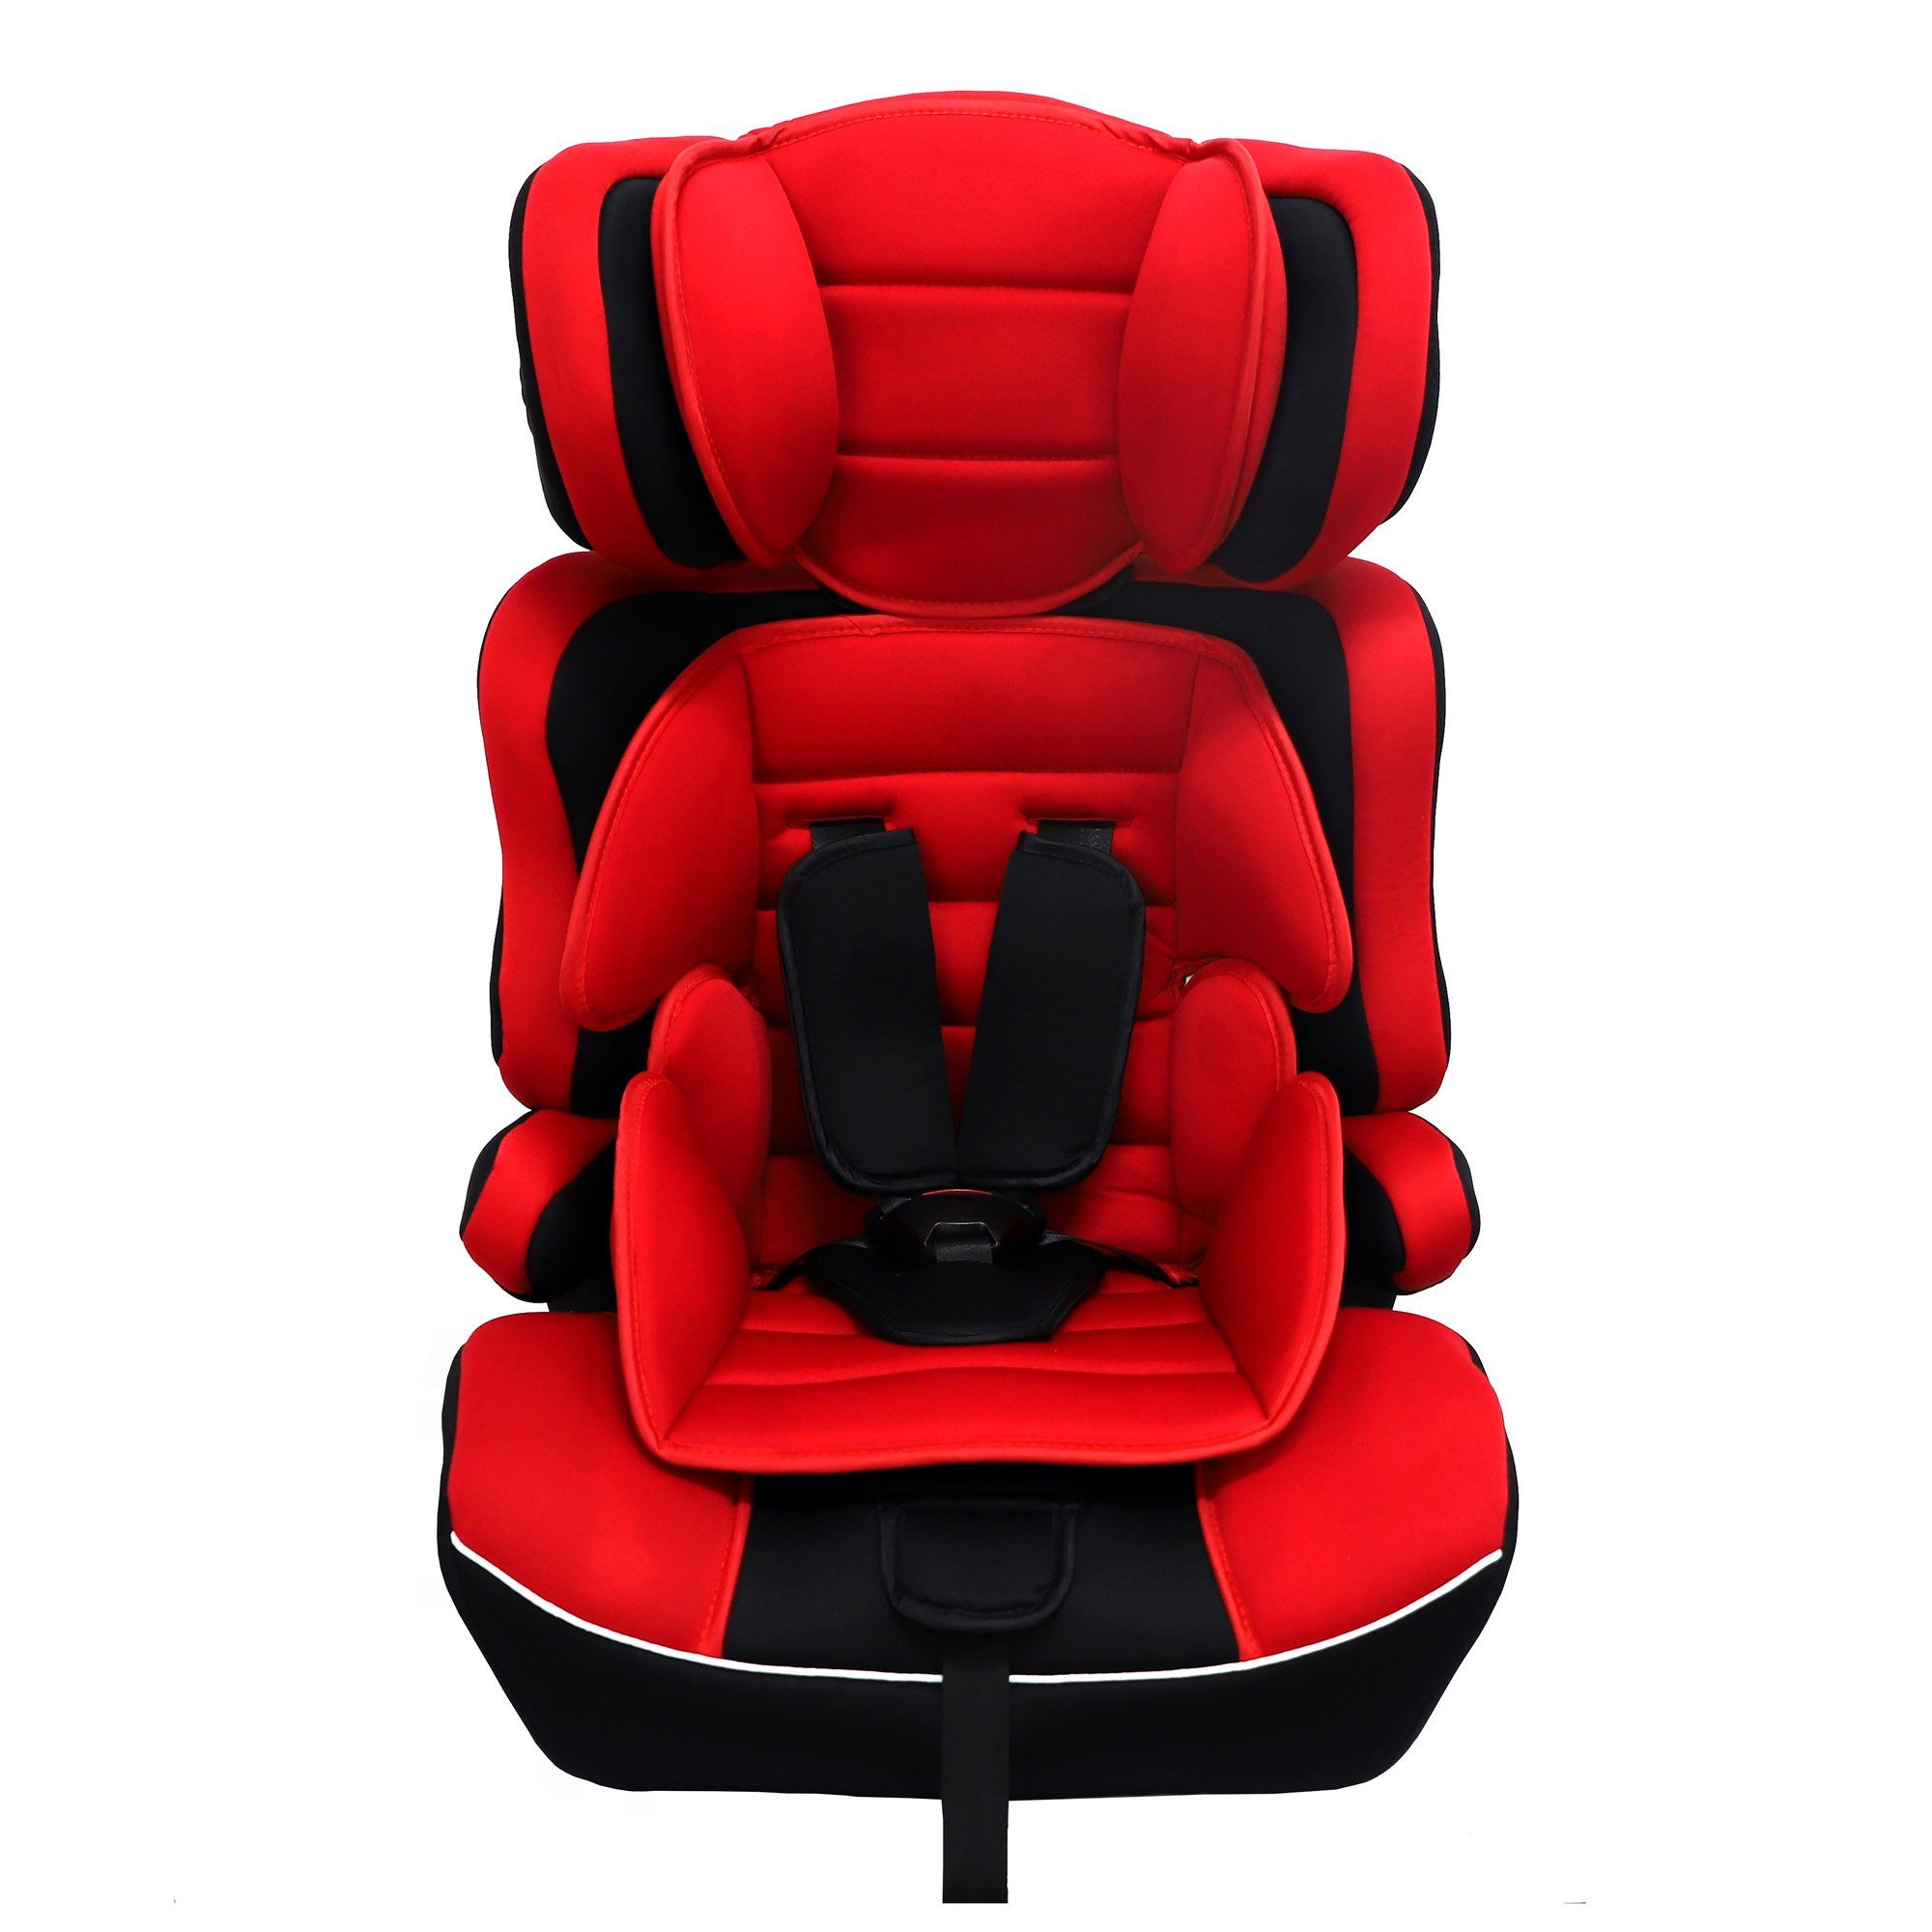 NEU Kindersitz Premium Rot Isofix Gruppe 1 2 3 Jahre Auto Kinder Sitz 9-36 kg 